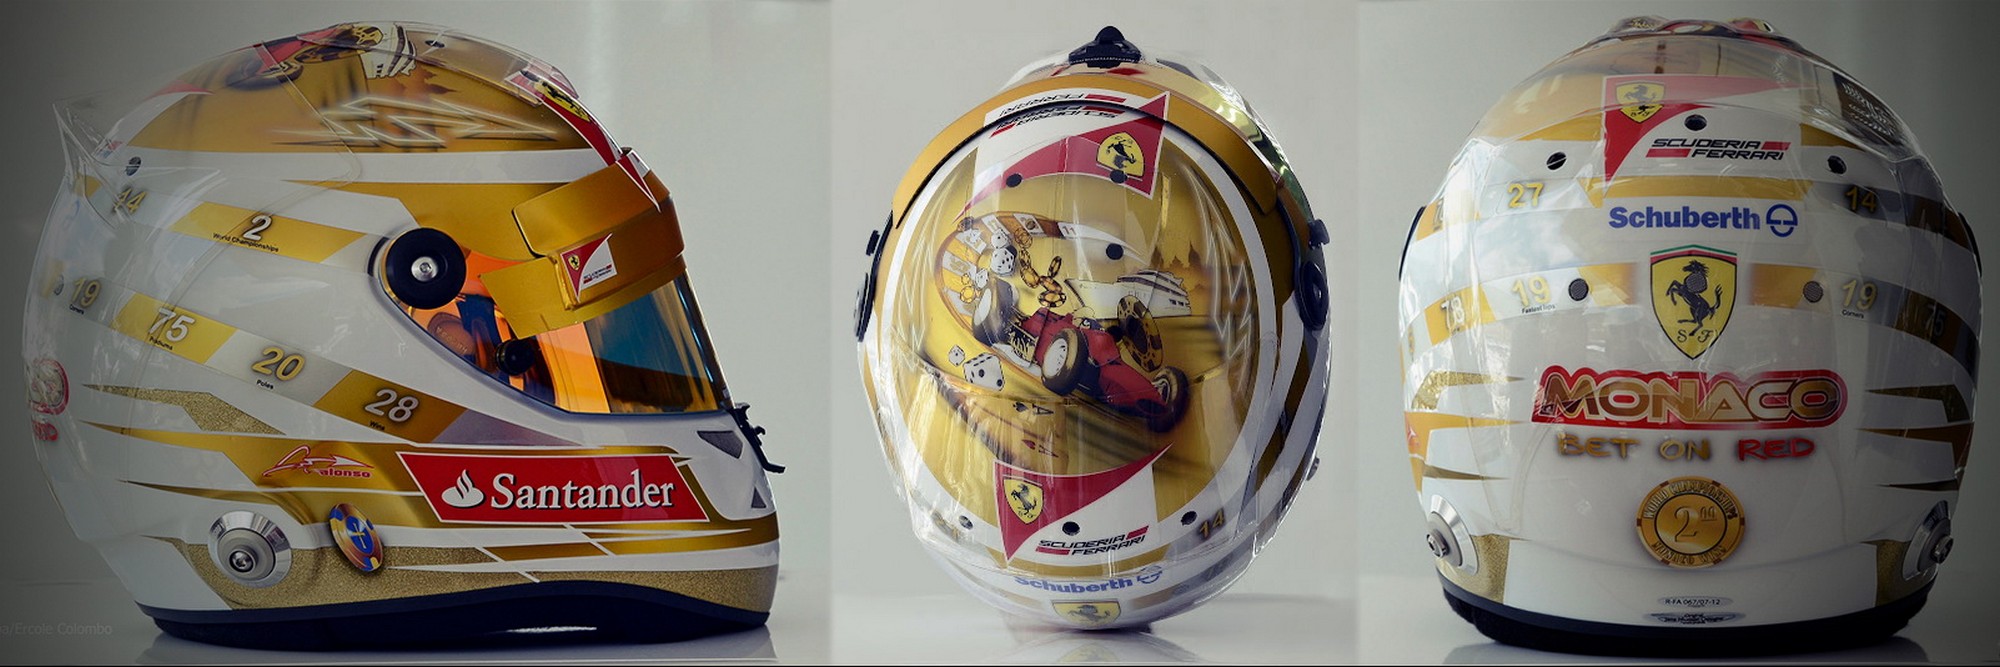 Шлем Фернандо Алонсо на Гран-При Монако 2012 | 2012 Monaco Grand Prix helmet of Fernando Alonso